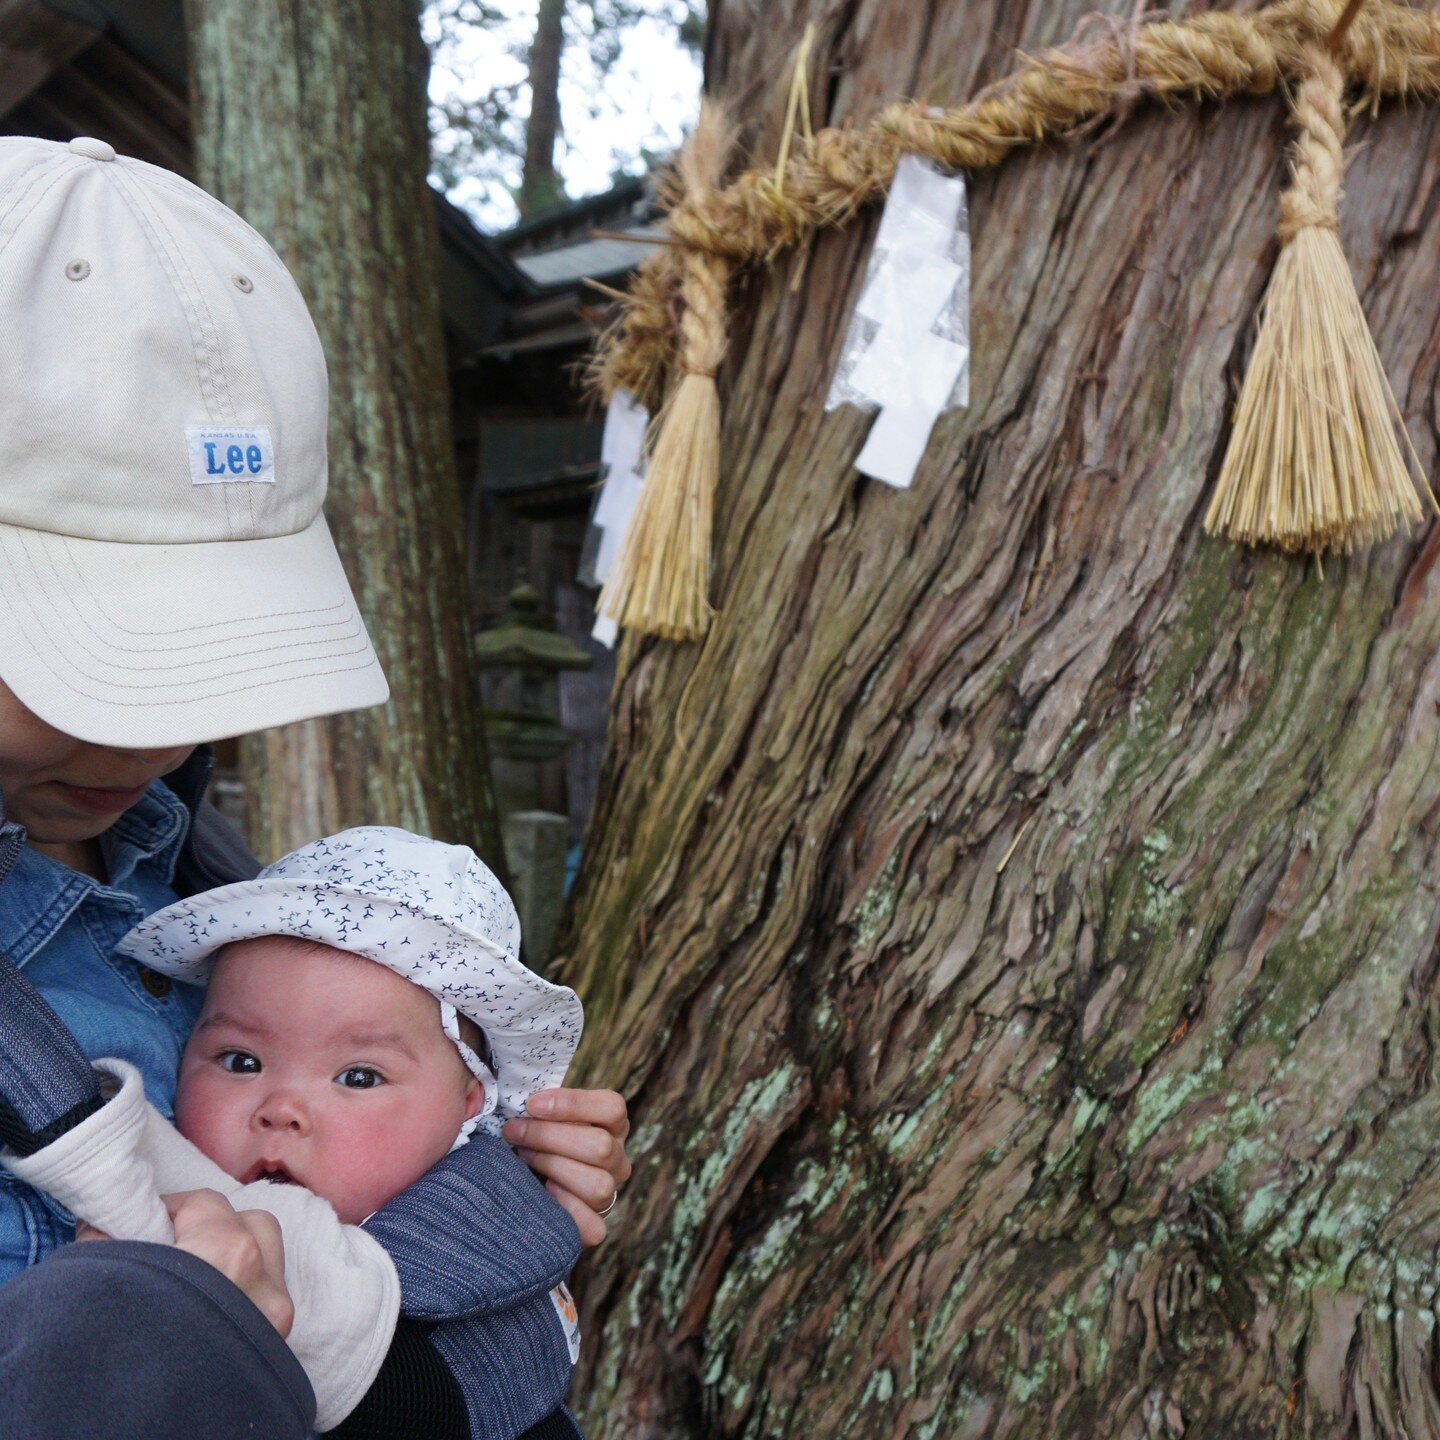 Hana-chan meets a many-hundred-year old cypress tree at Hachimangu Shrine in Mitake, Kiso
木曽の三岳、八幡宮。はなちゃんが数百年もの歳月を生きる檜の大木に出会いました
#日本の神社 #japaneseshrines 
#子連れ旅行 #travelingwithkids #kisovalley #木曽谷